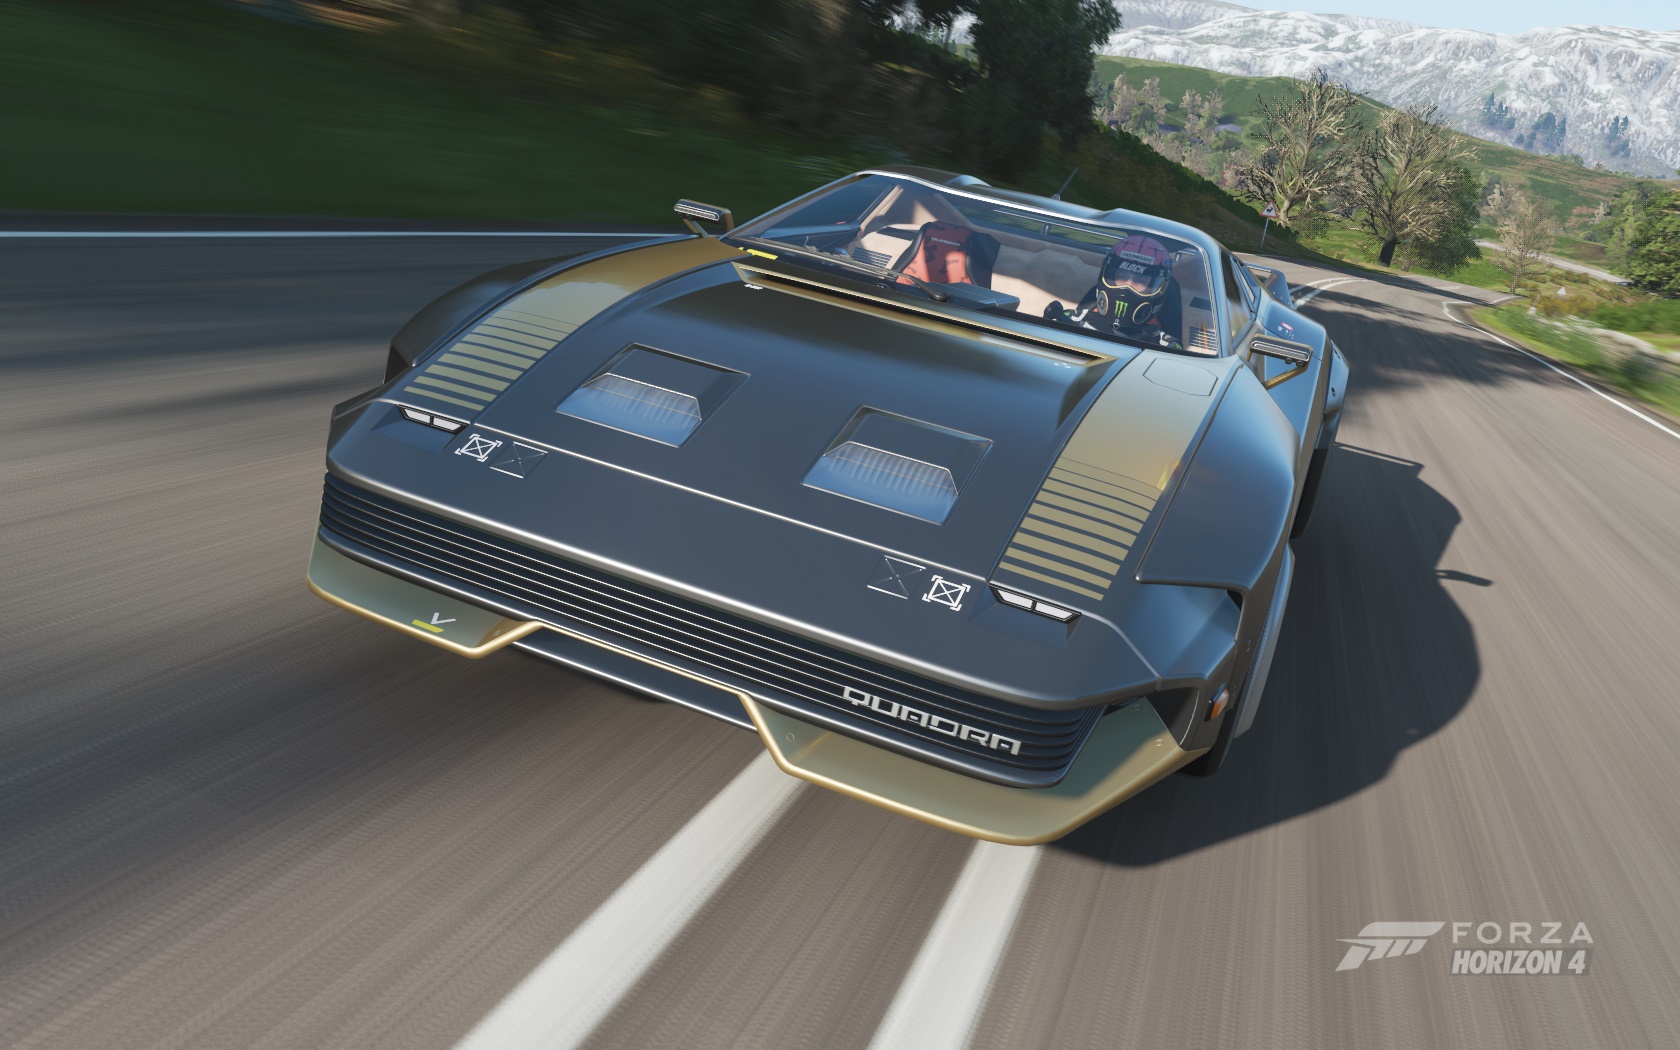 General 1680x1050 Forza Horizon 4 futuristic screen shot video games Forza car Quadra Turbo-R V-Tech Quadra vehicle road asphalt